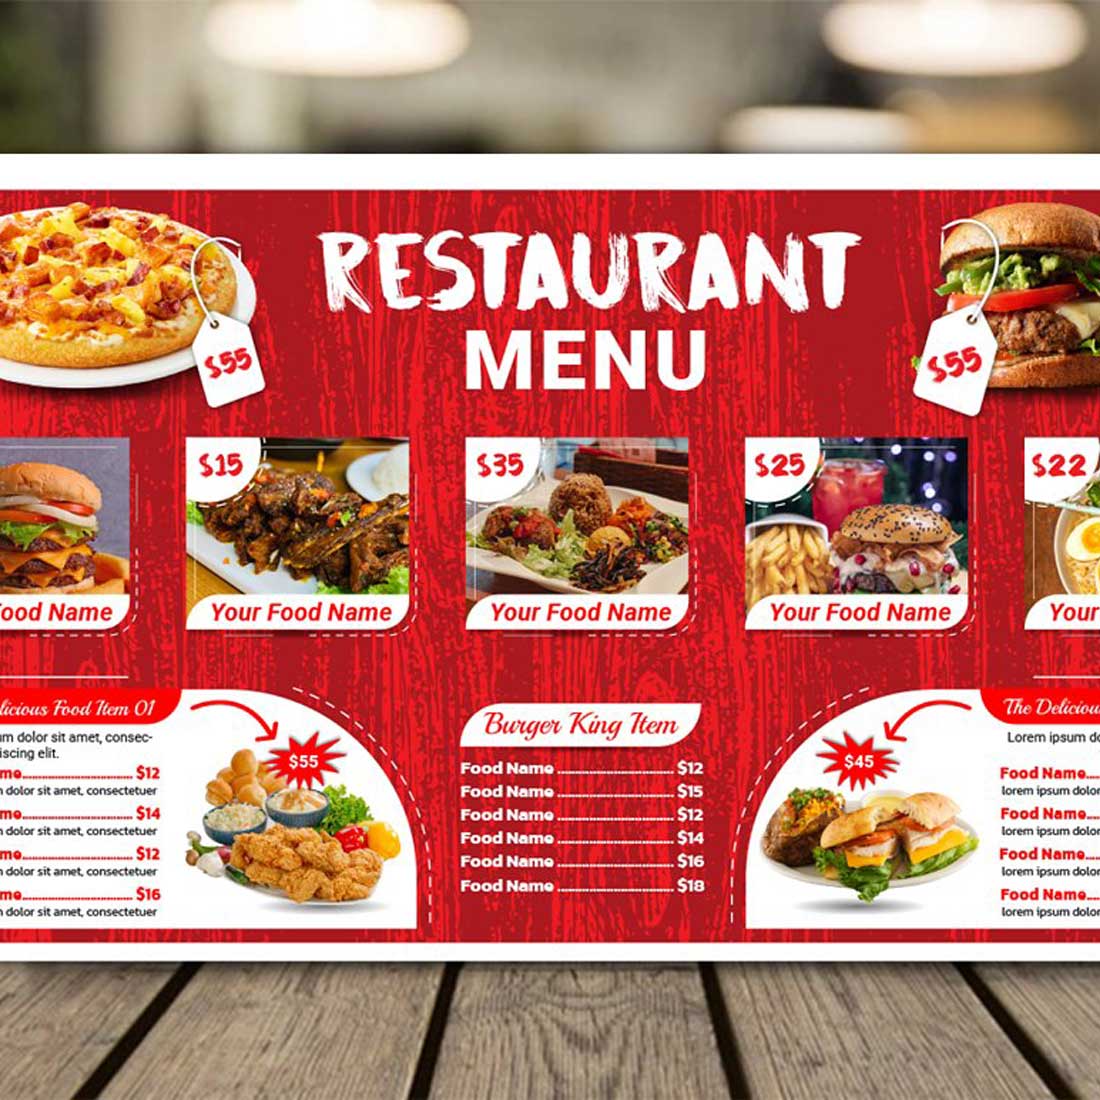 Digital Menu Boards for Restaurant preview image.